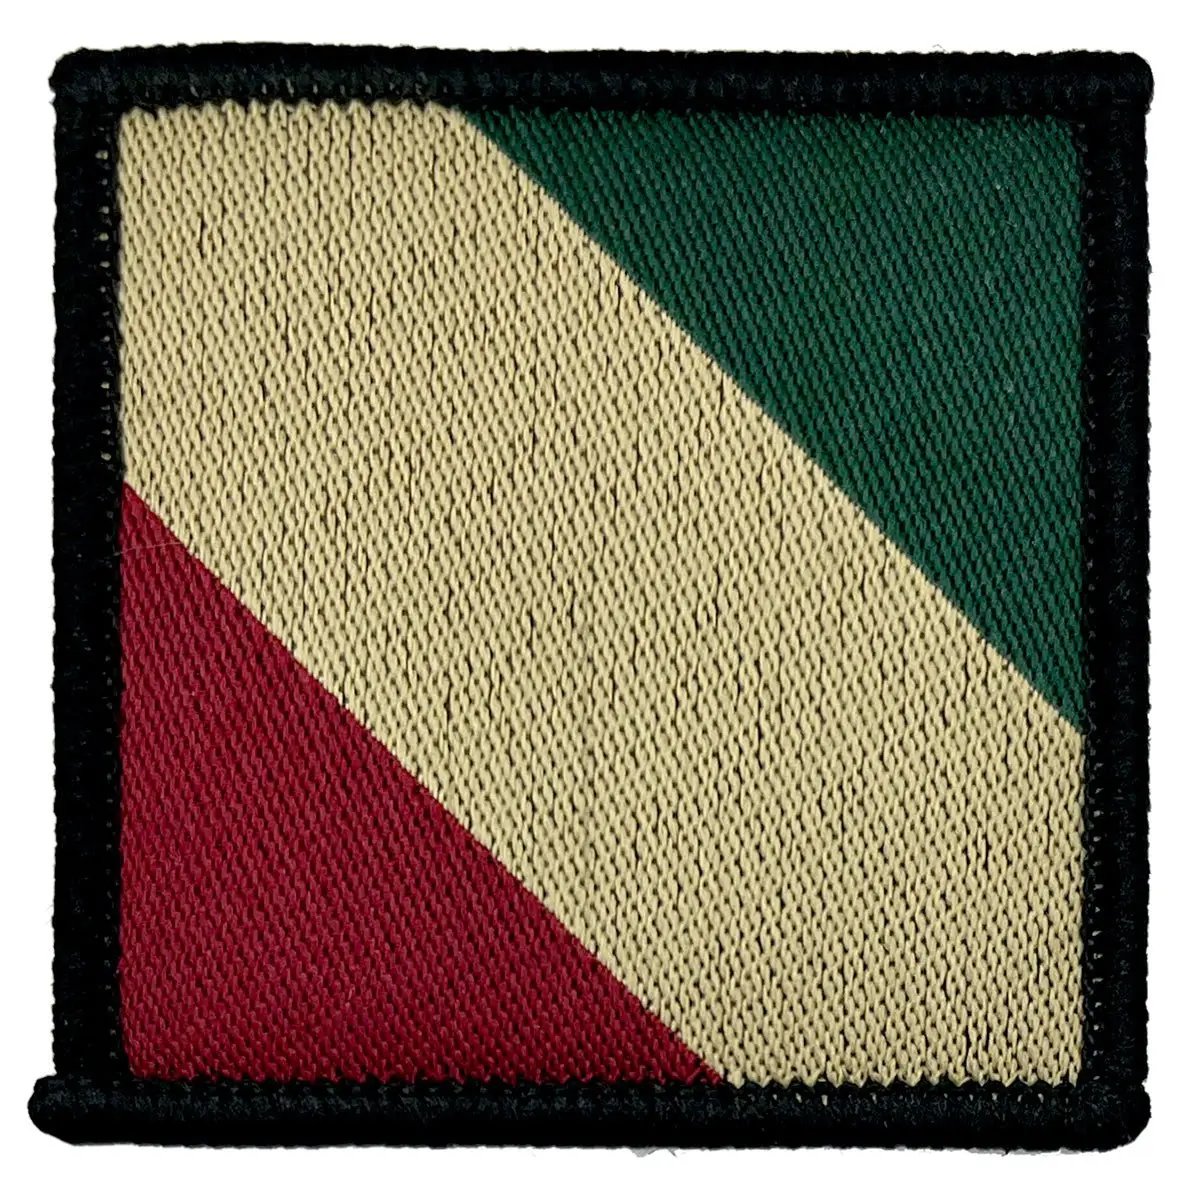 Mercian Regiment TRF - Iron or Sewn On Patch - John Bull Clothing